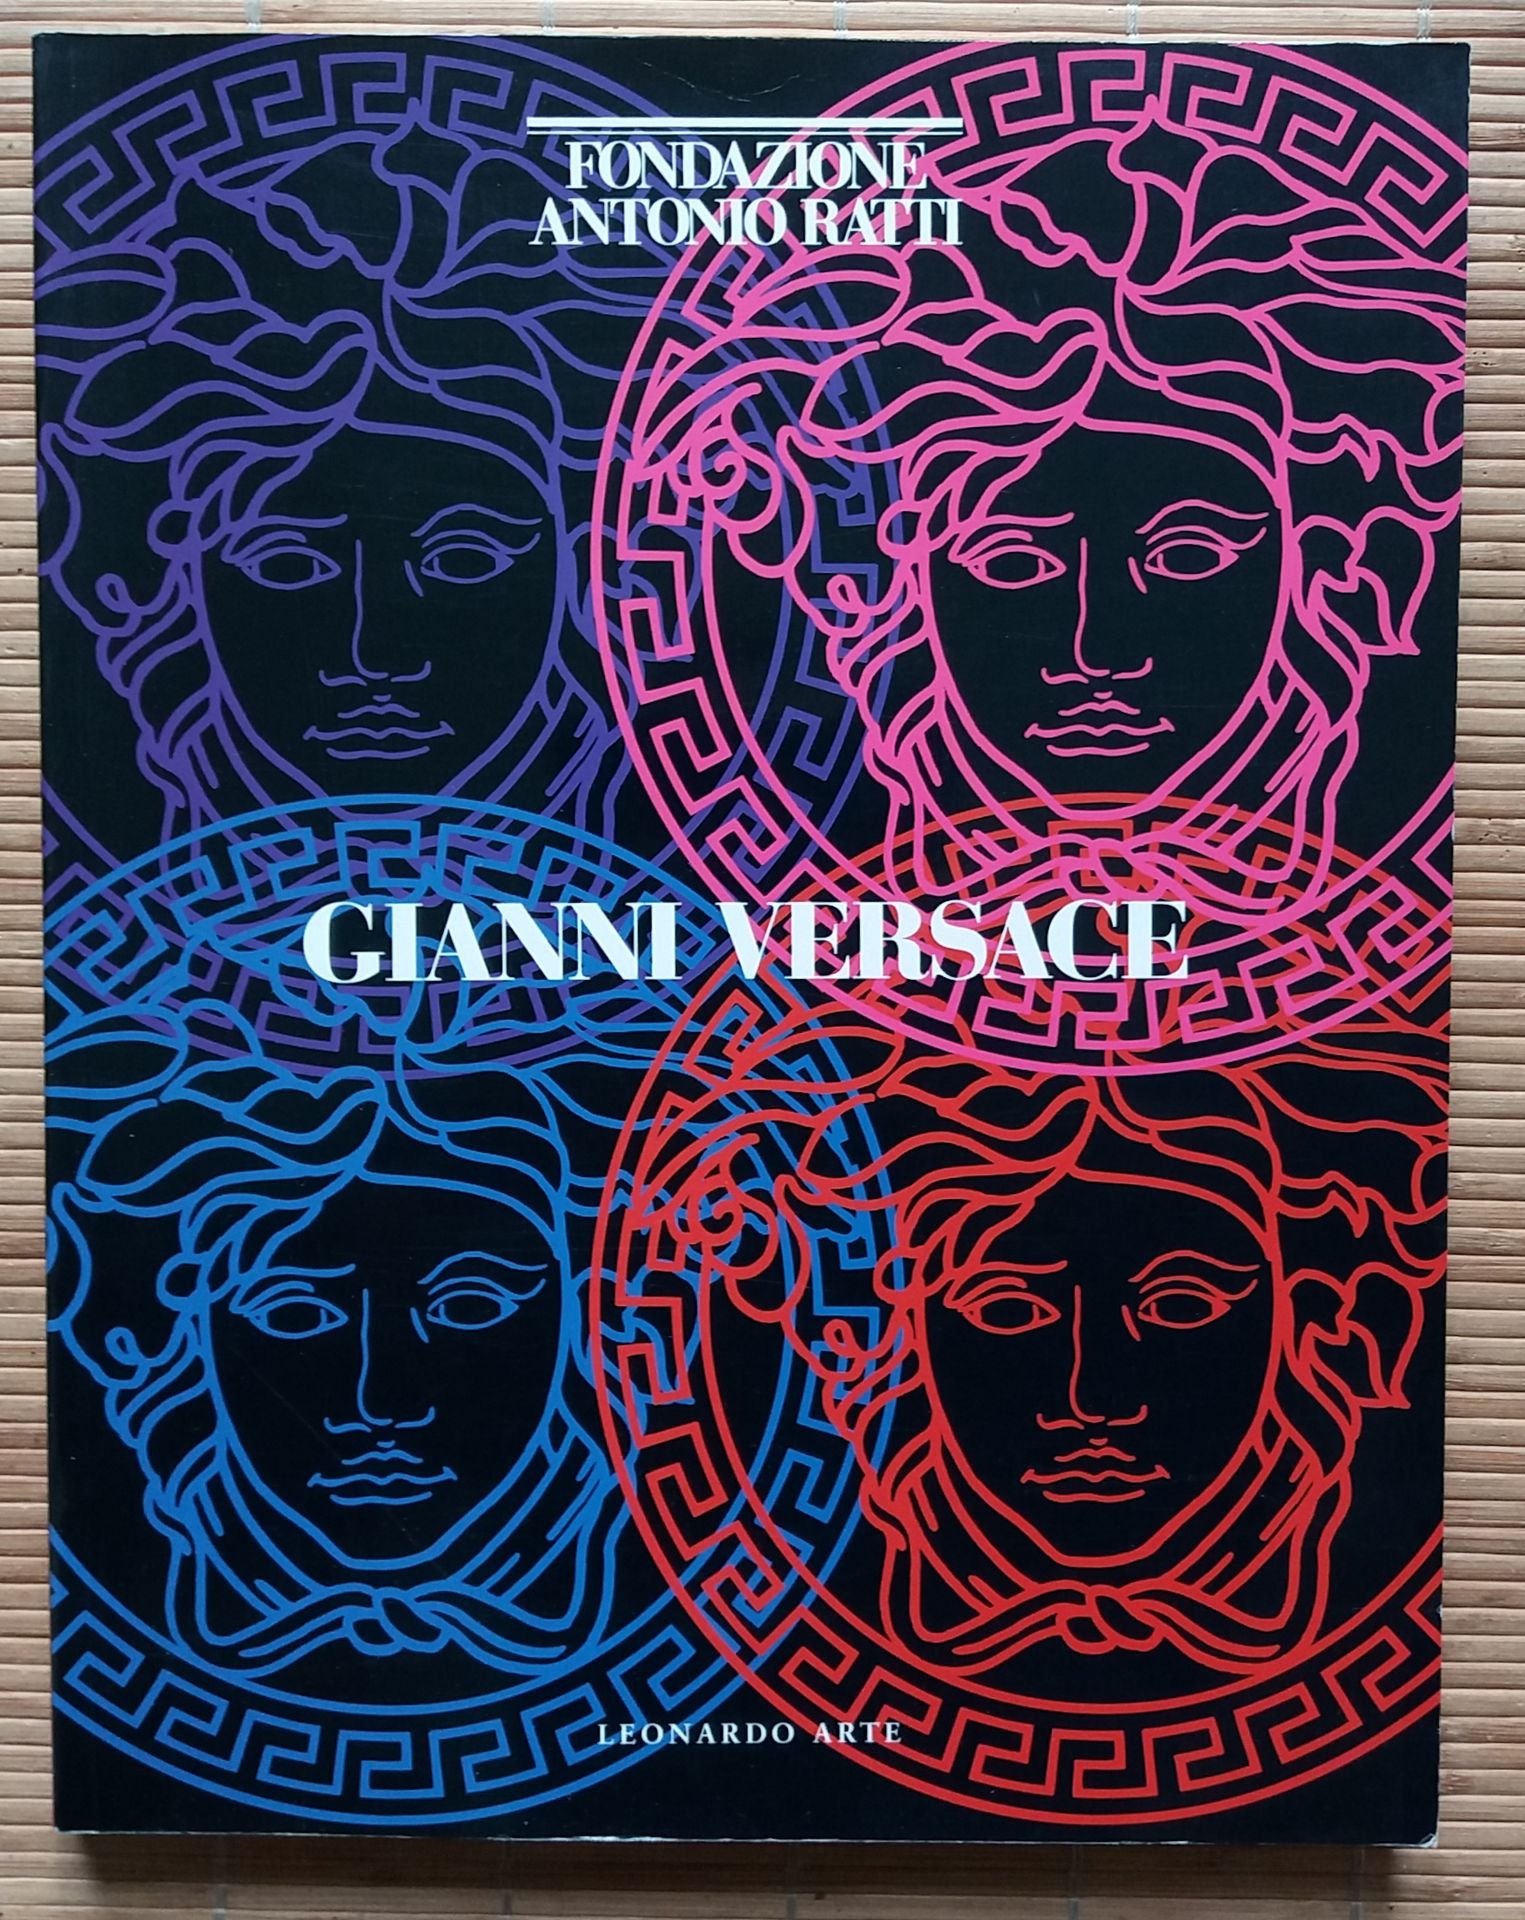 Null [MODE - FASHION]
Lot de 12 ouvrages.

*Gianni Versace.
Leonardo Arte, 1998.&hellip;